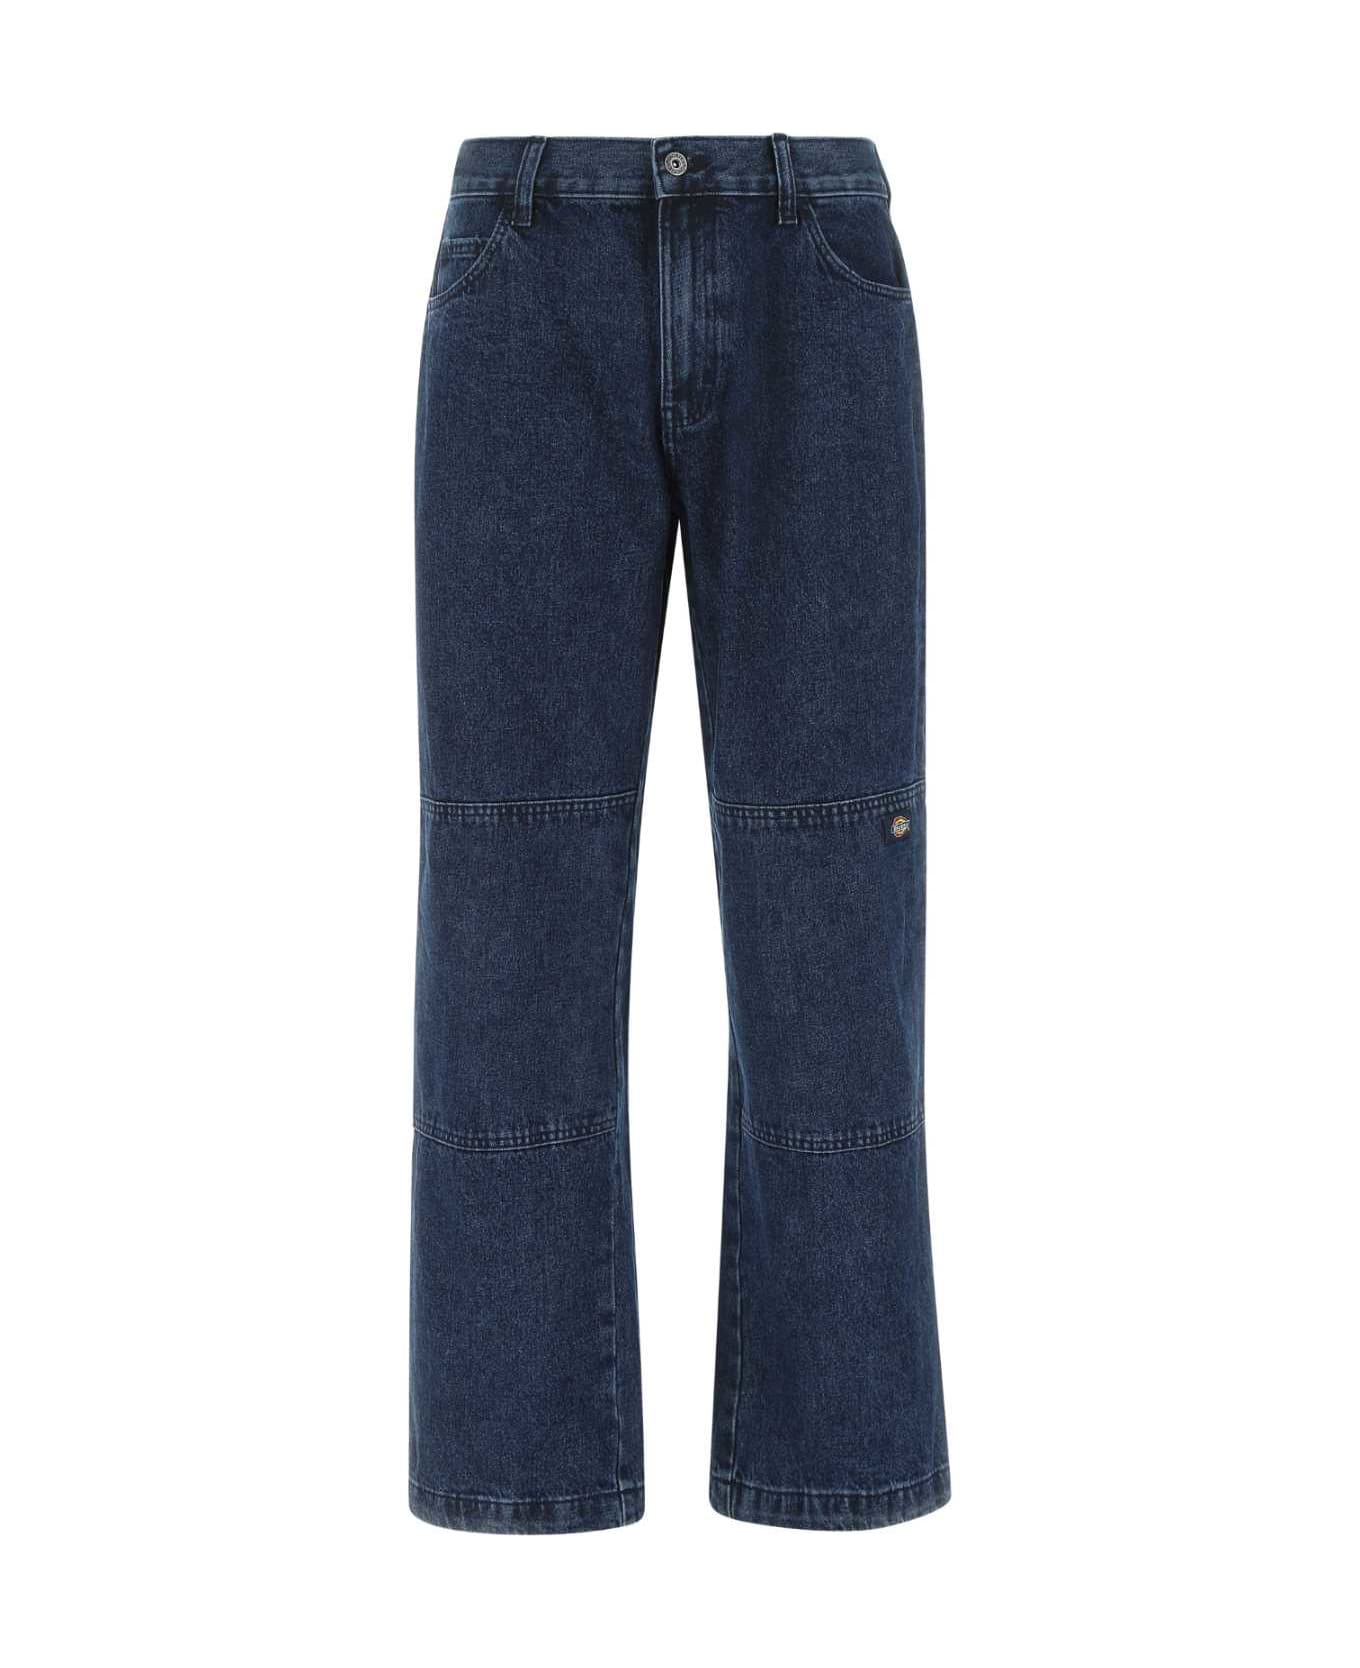 Dickies Blue Denim Jeans - IND1 デニム